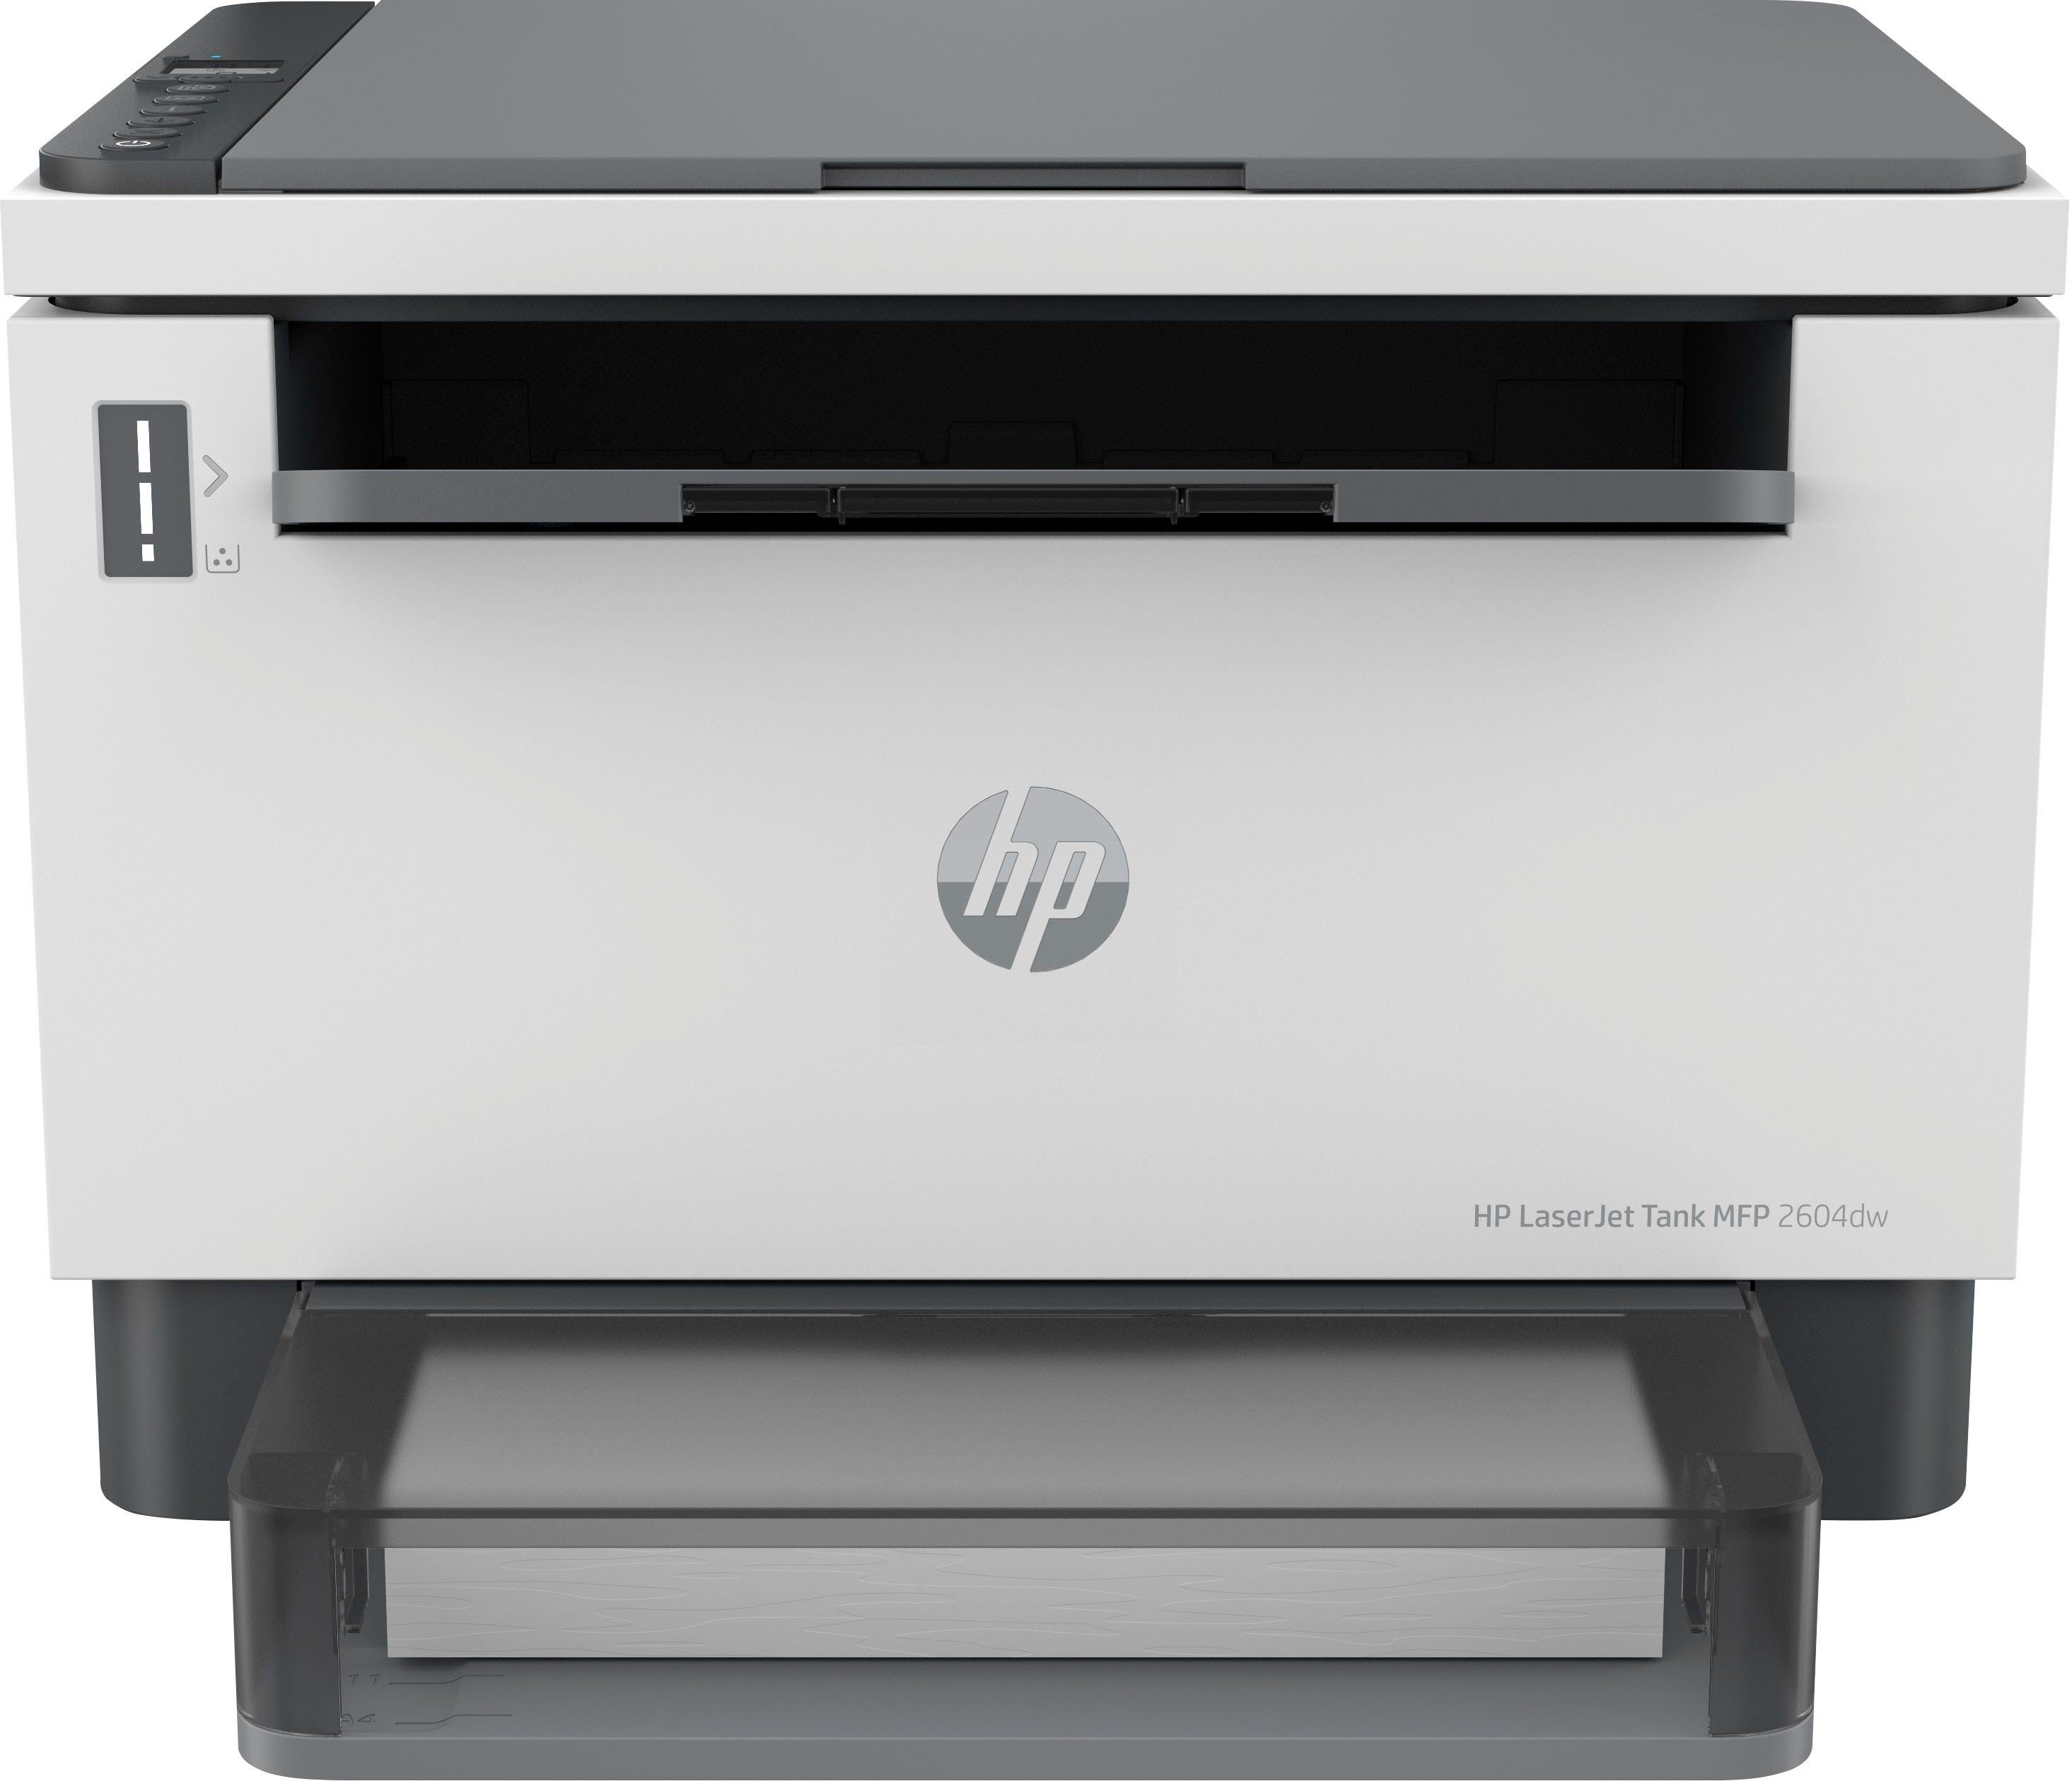 HP LaserJet Tank MFP WLAN (Wi-Fi), (Ethernet), Instant (LAN kompatibel) Printer Ink Laserdrucker, 2604DW HP